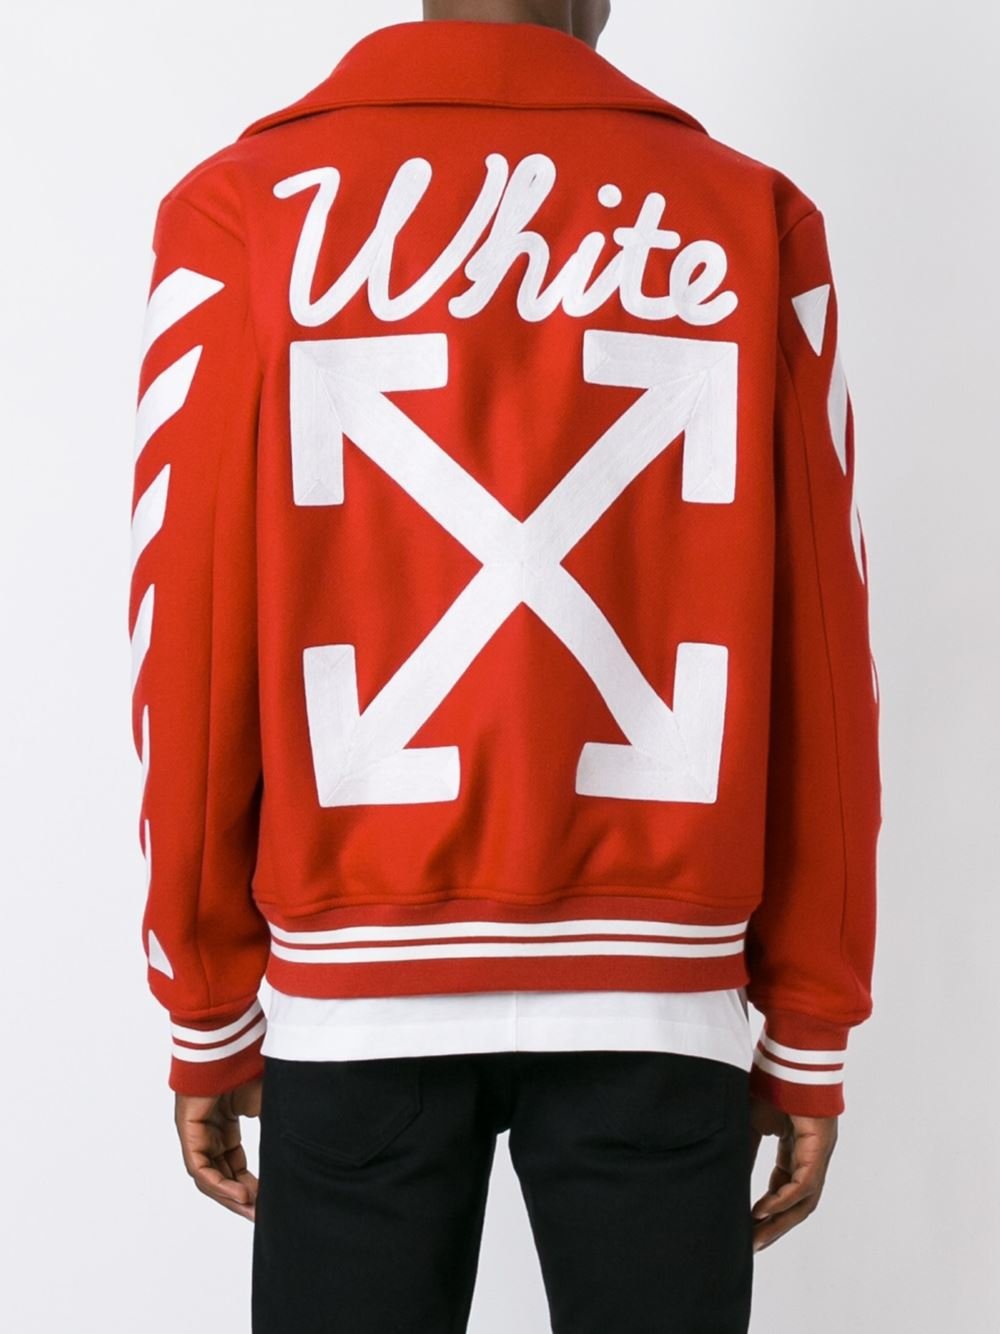 Virgil Abloh Off-White Varsity Jacket